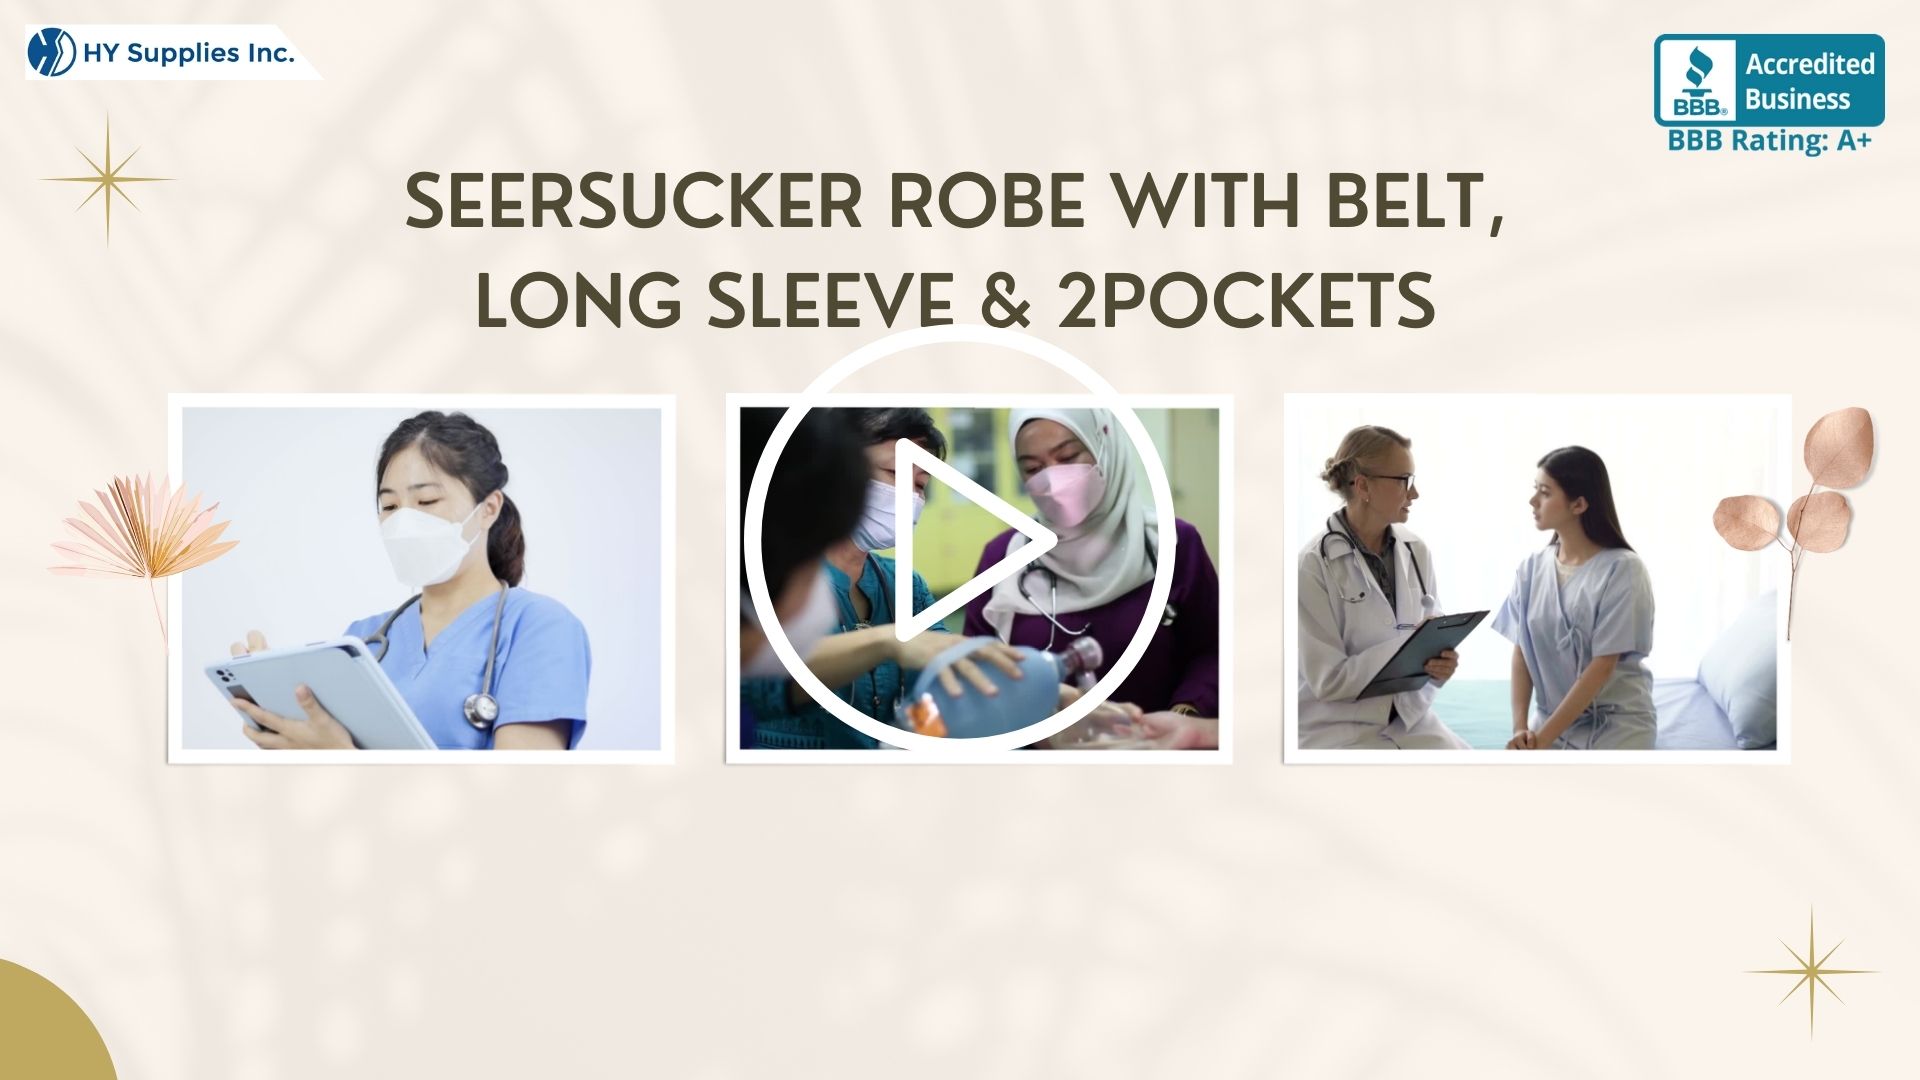 SEERSUCKER ROBE WITH BELT, LONG SLEEVE & 2POCKETS